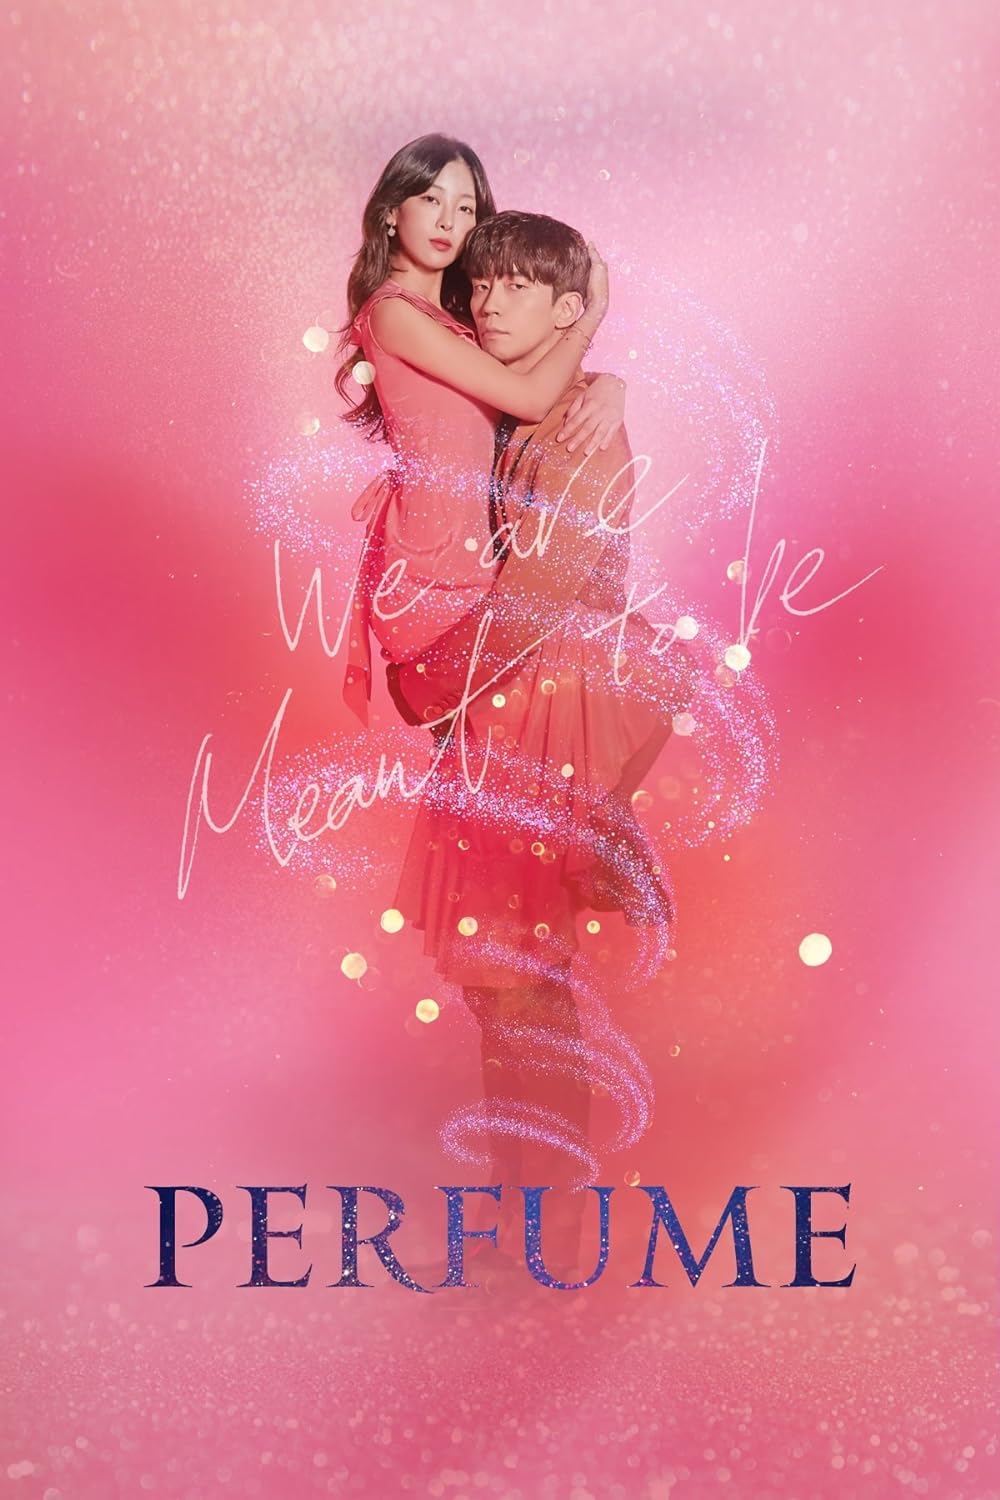 Perfume (Season 1) Hindi Dubbed WEB-DL - 480p 720p | Full Movie